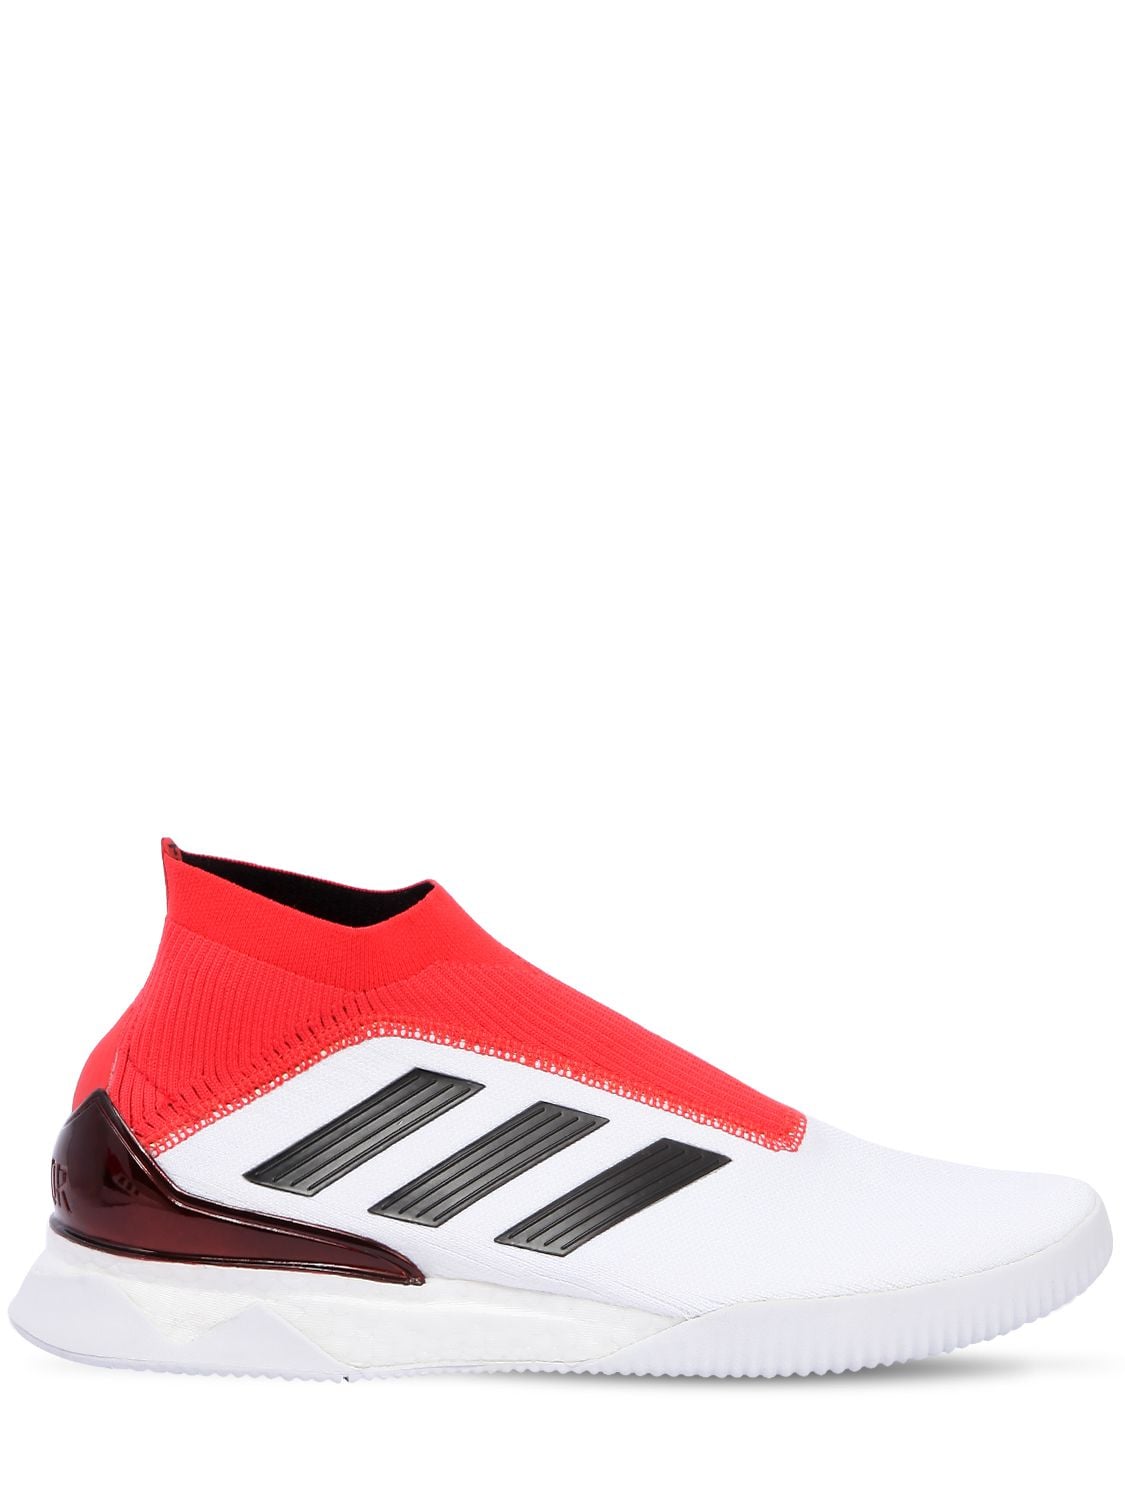 Adidas X Nemeziz Predator Tango 18+ Tr Primeknit Sneakers In White